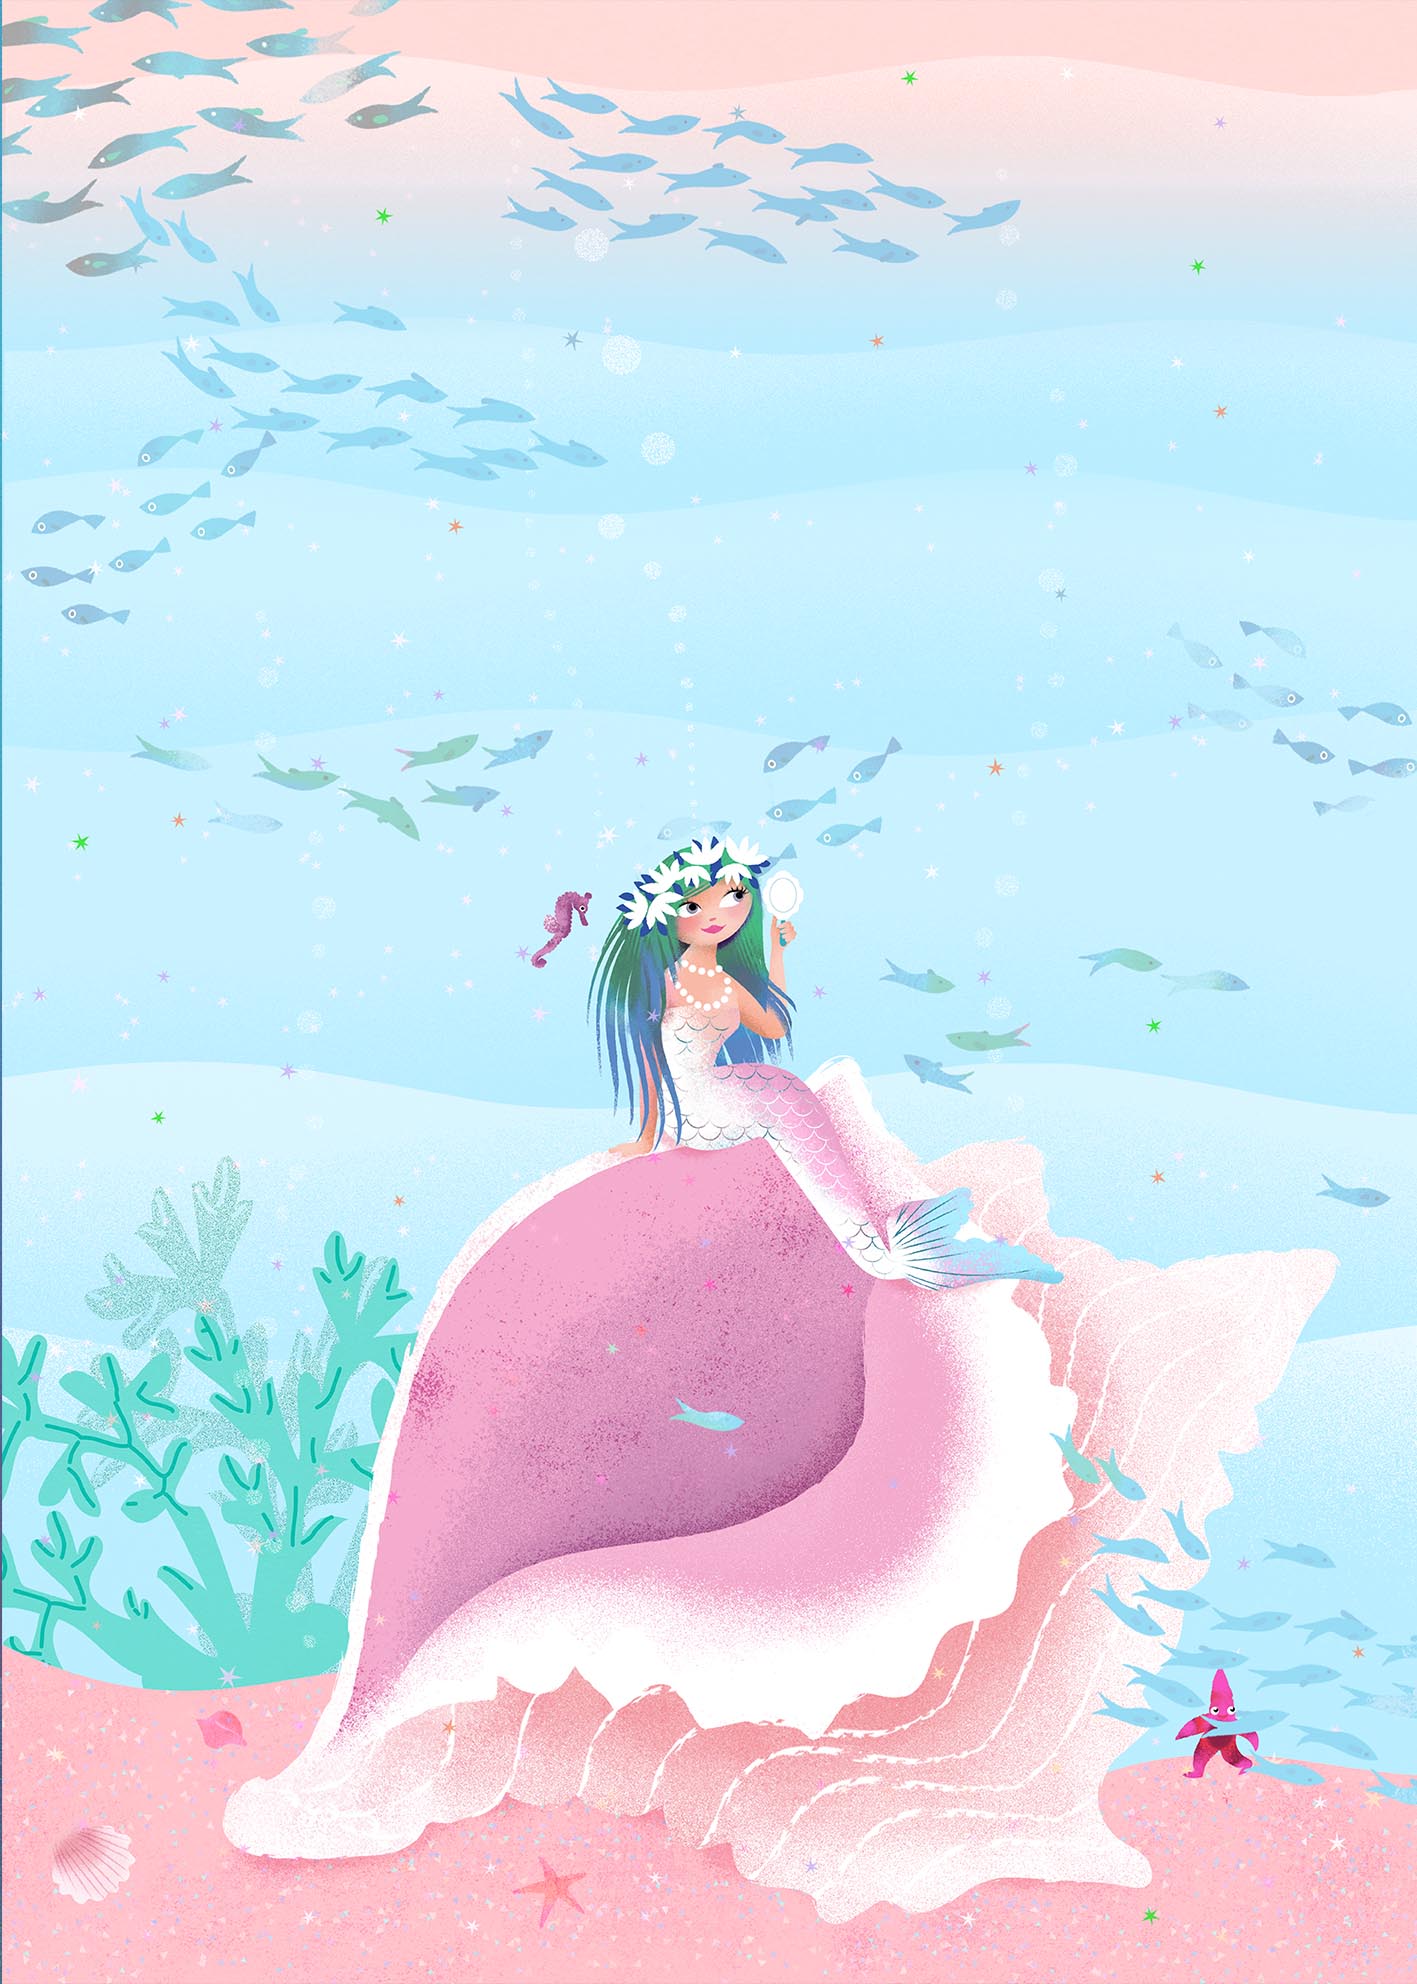 Mermaid sitting on a shell illustration